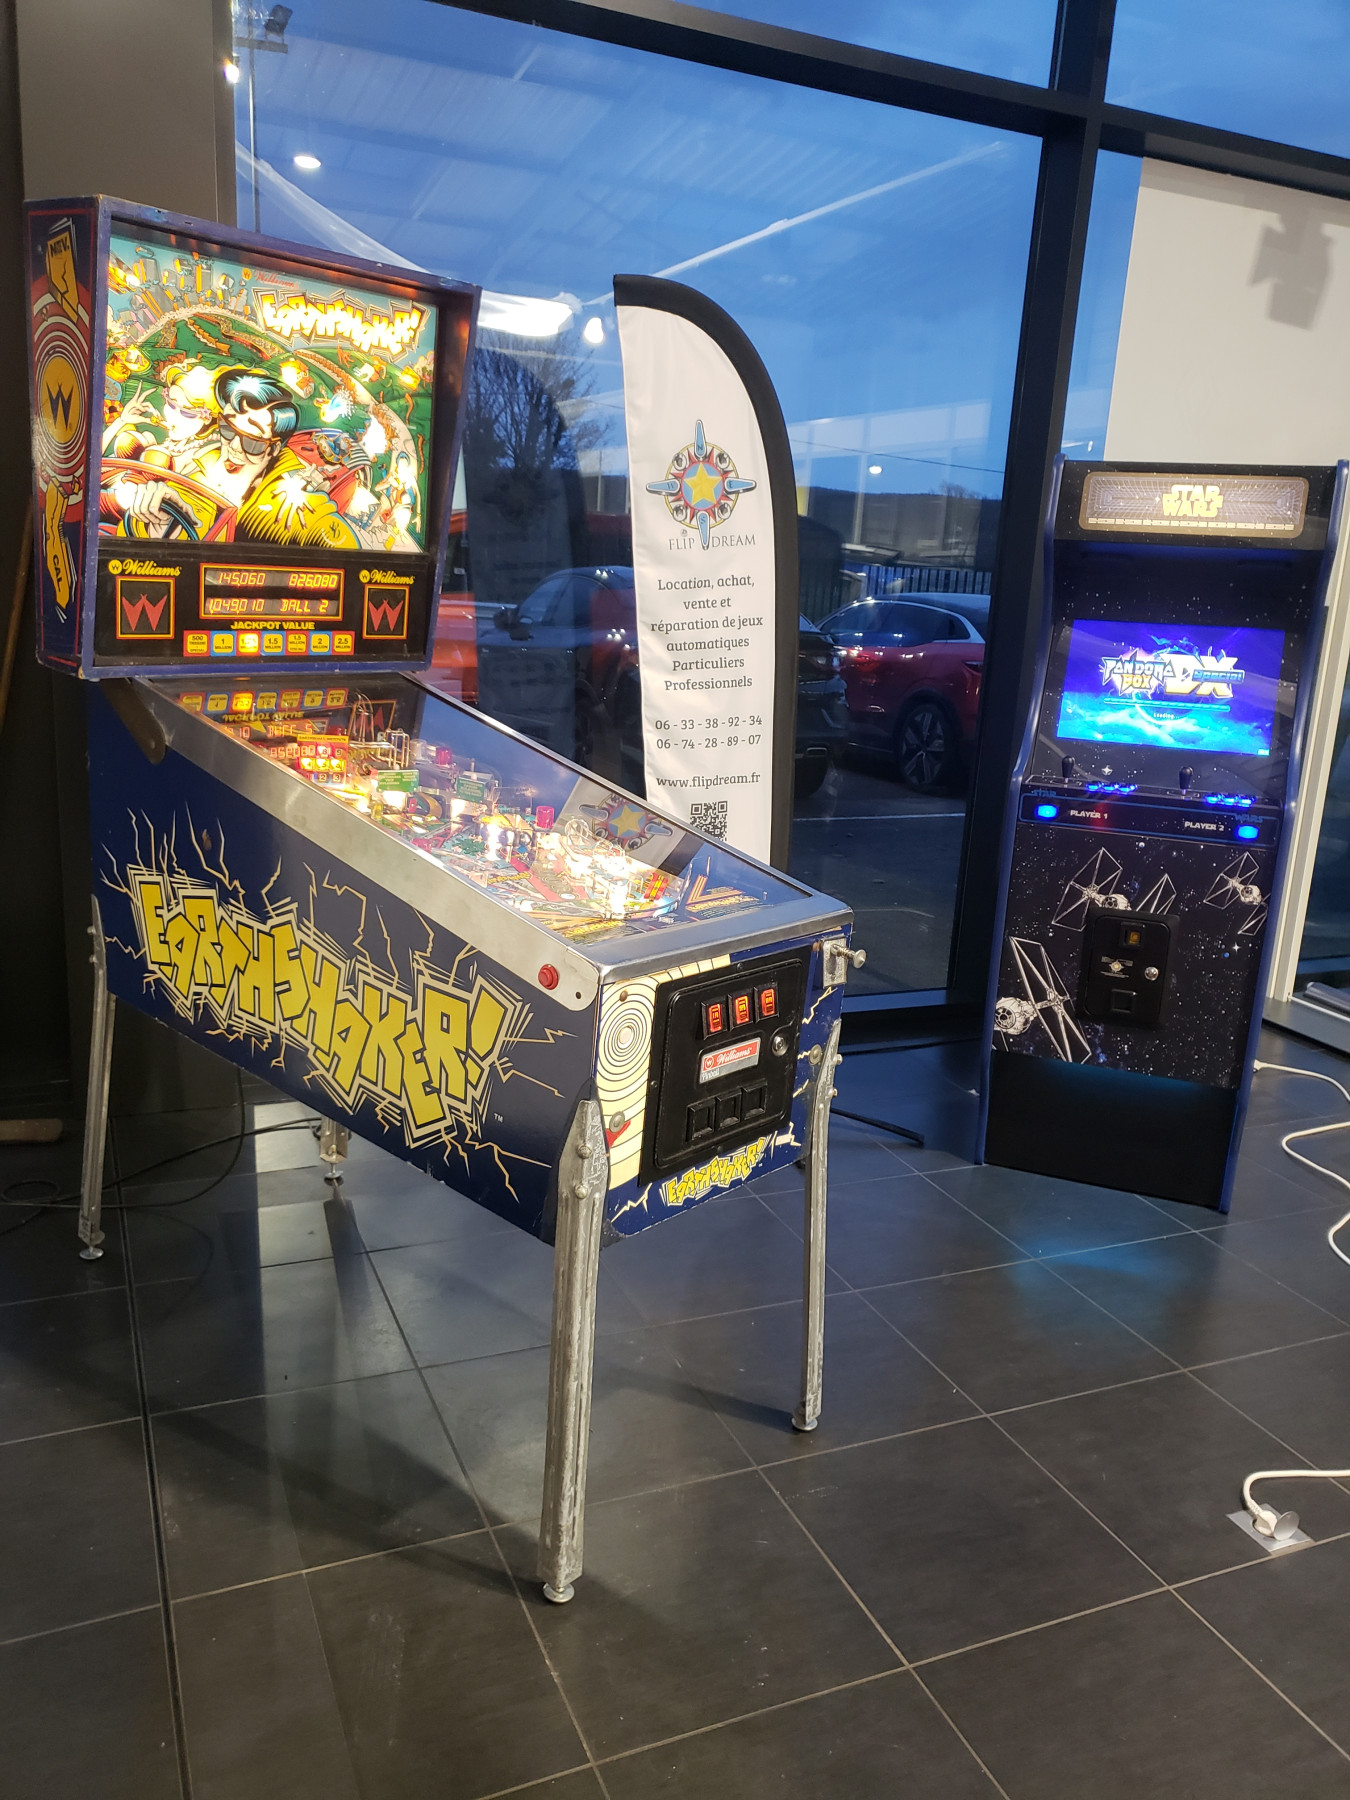 Borne arcade Starwars 5000 jeux